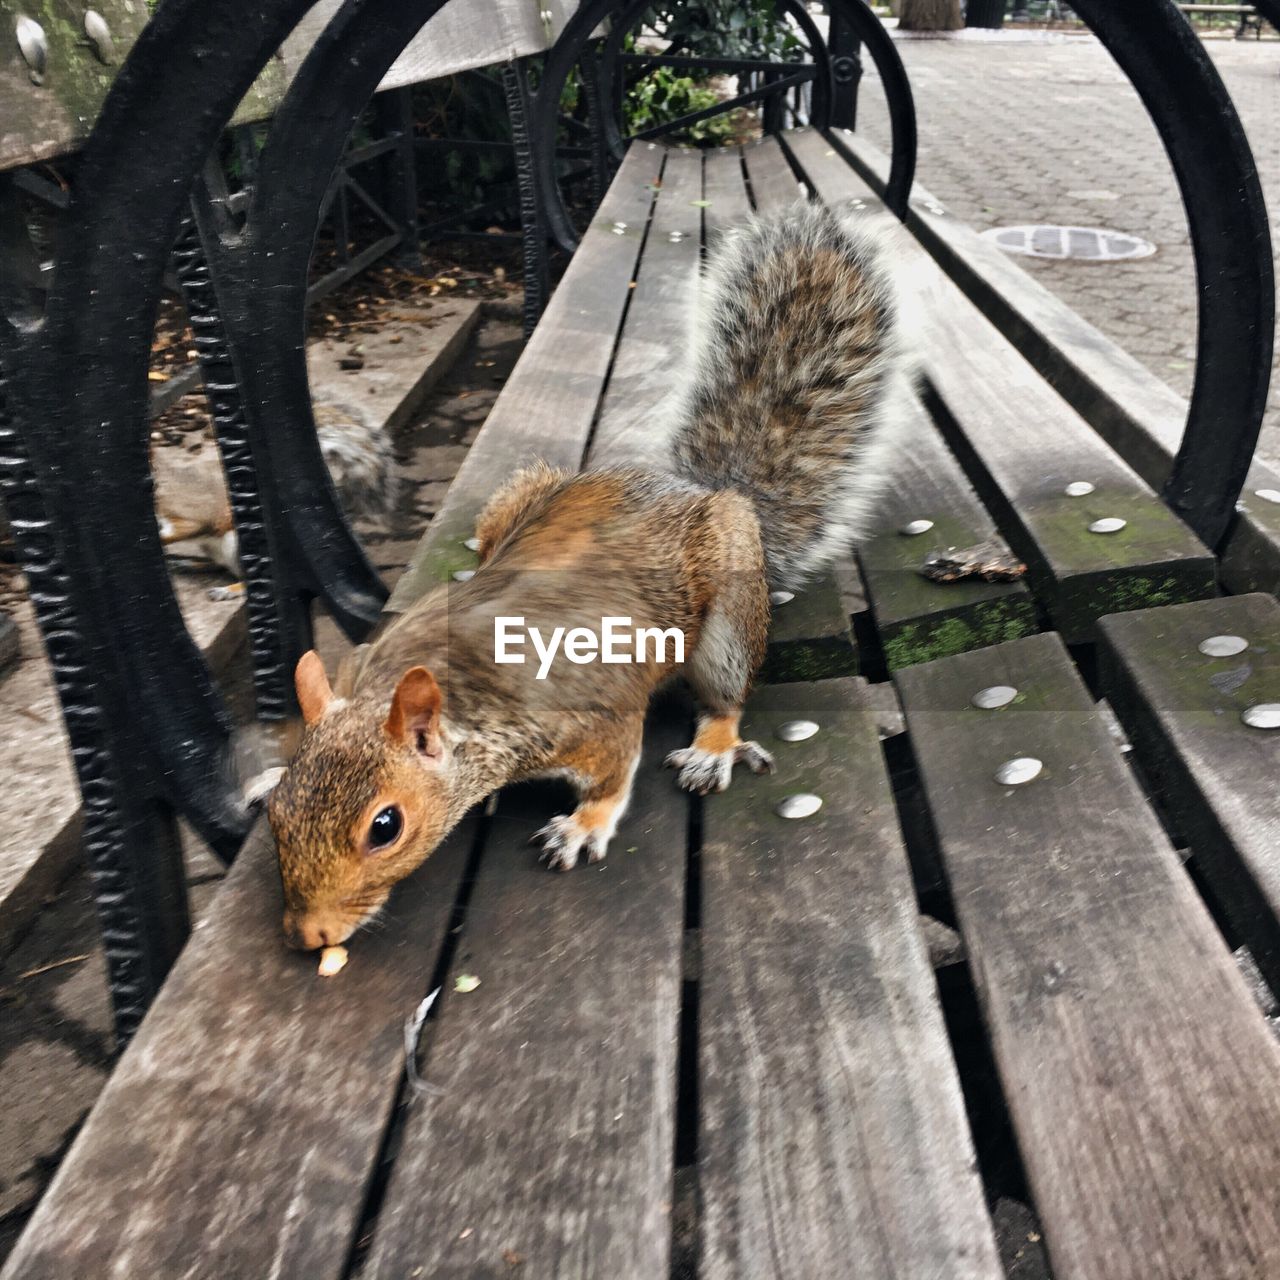 Squirrel on wooden bench